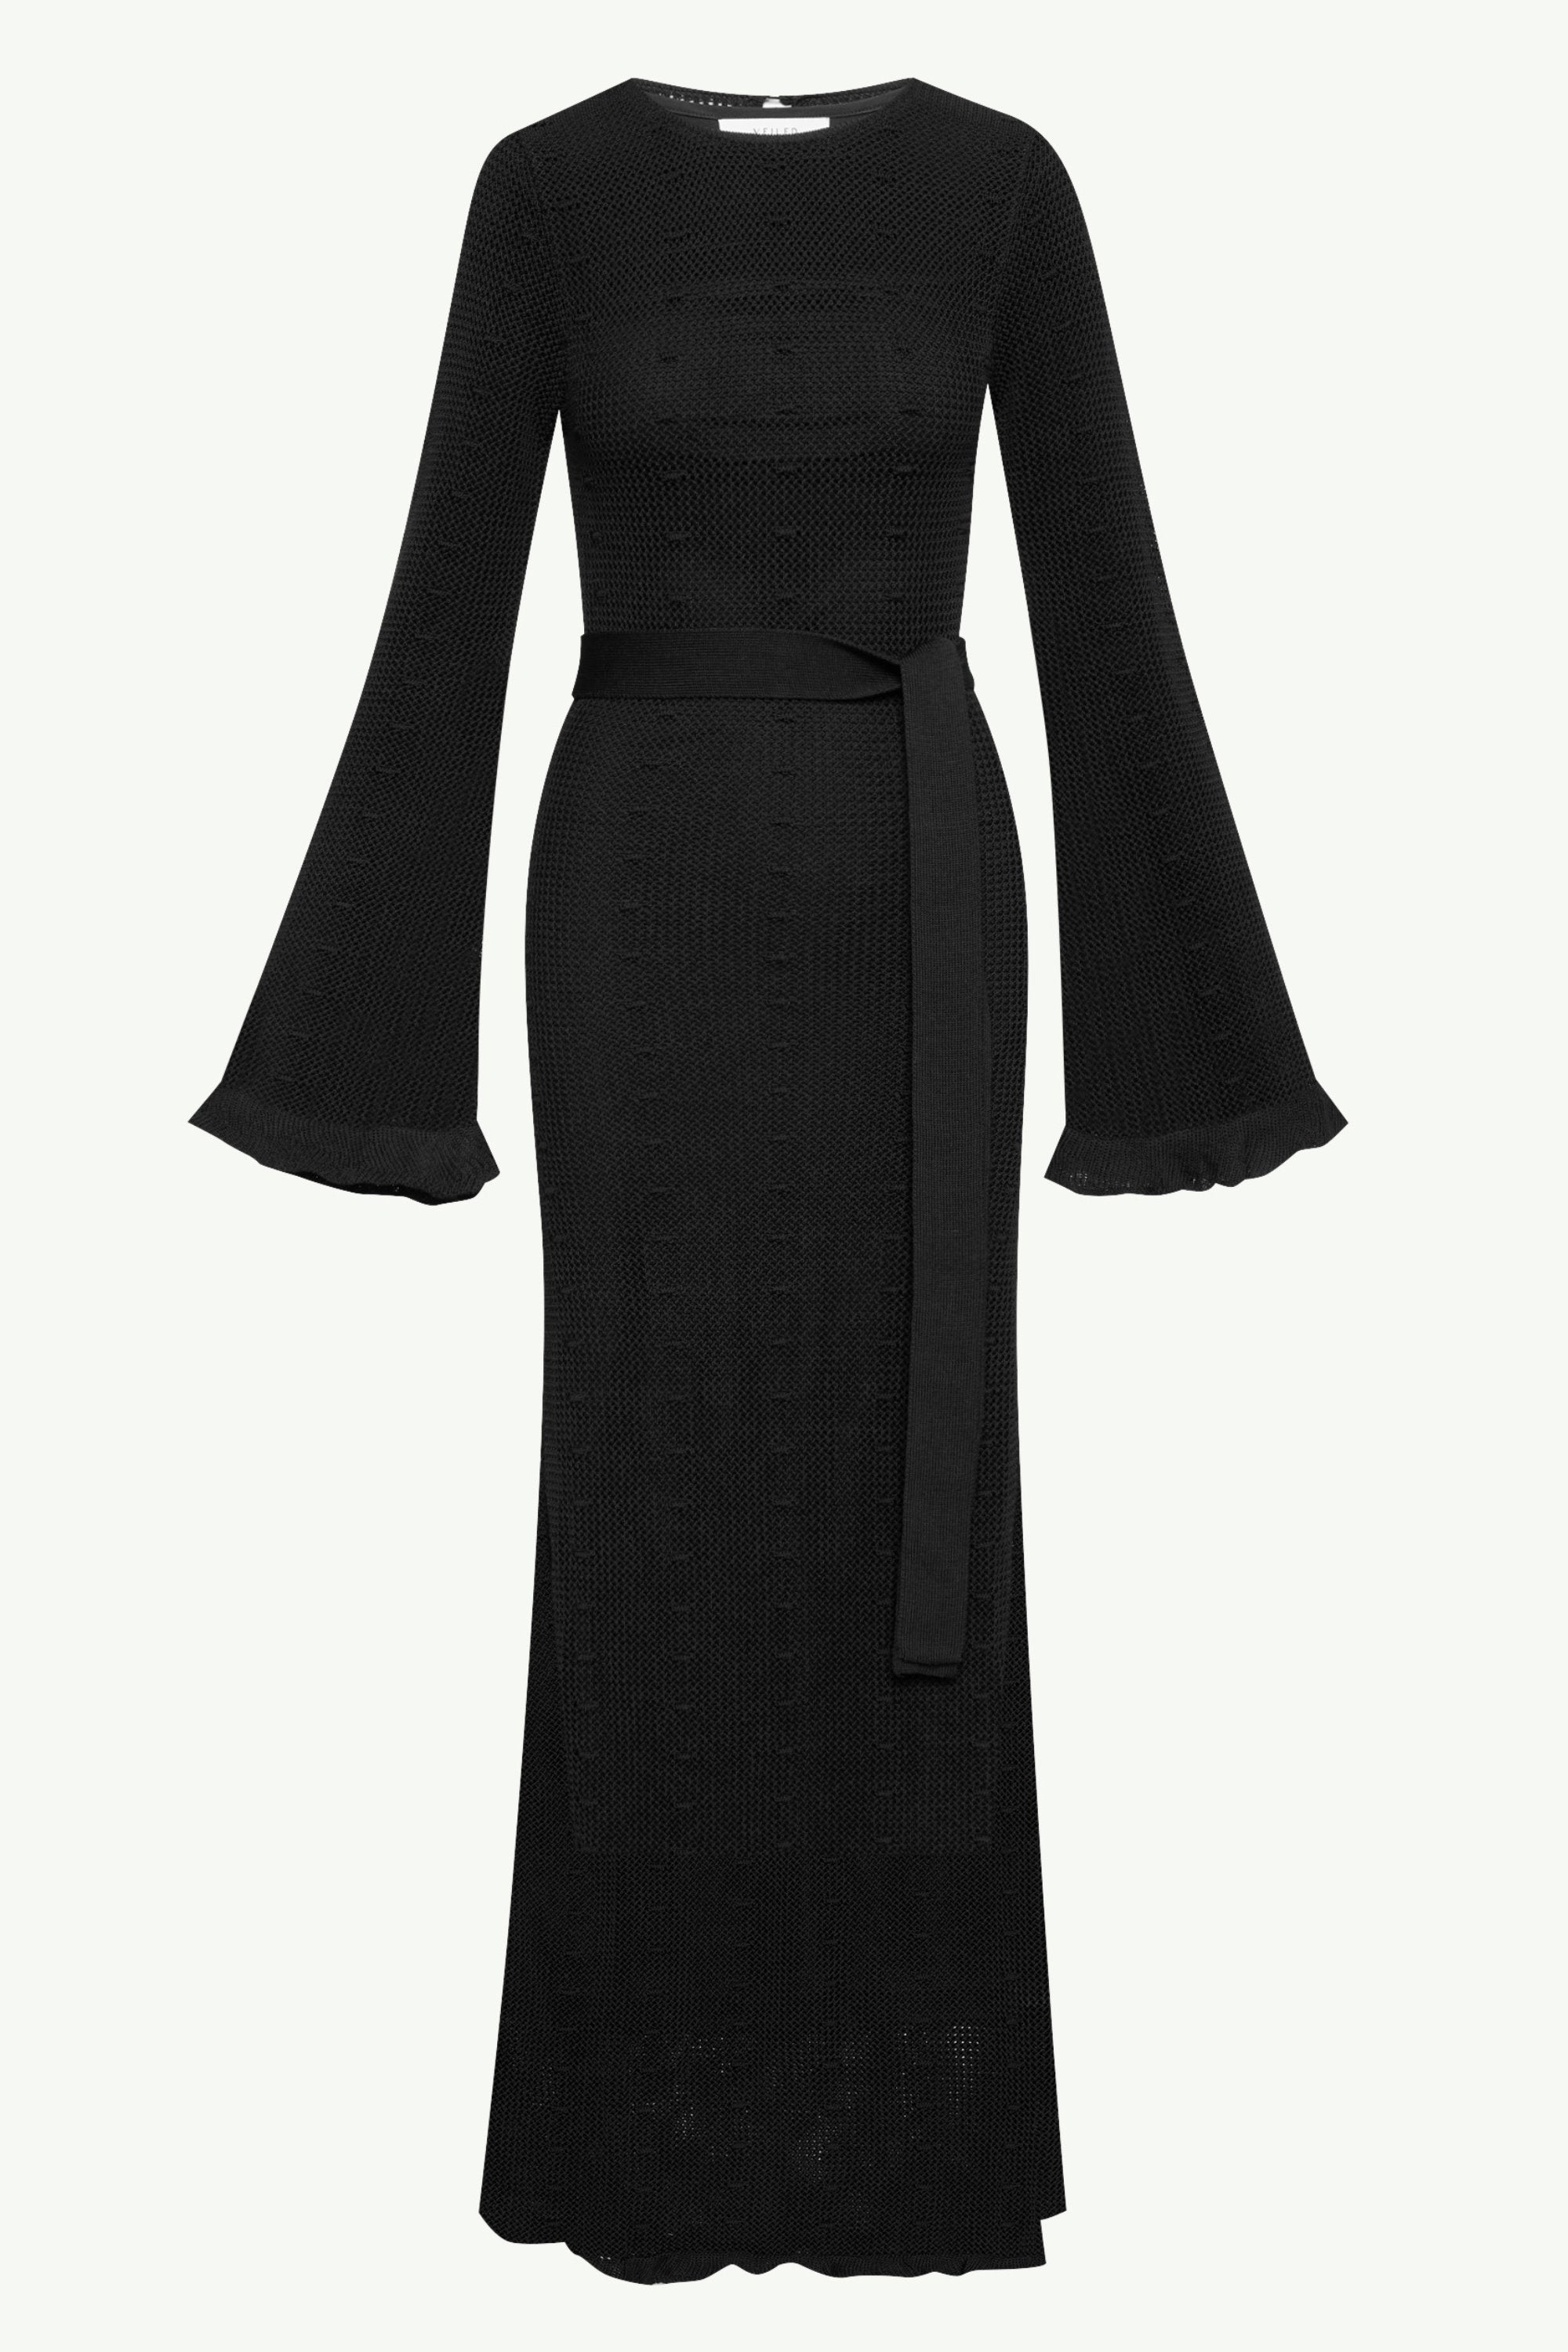 Leilani Crochet Maxi Dress - Black Clothing epschoolboard 